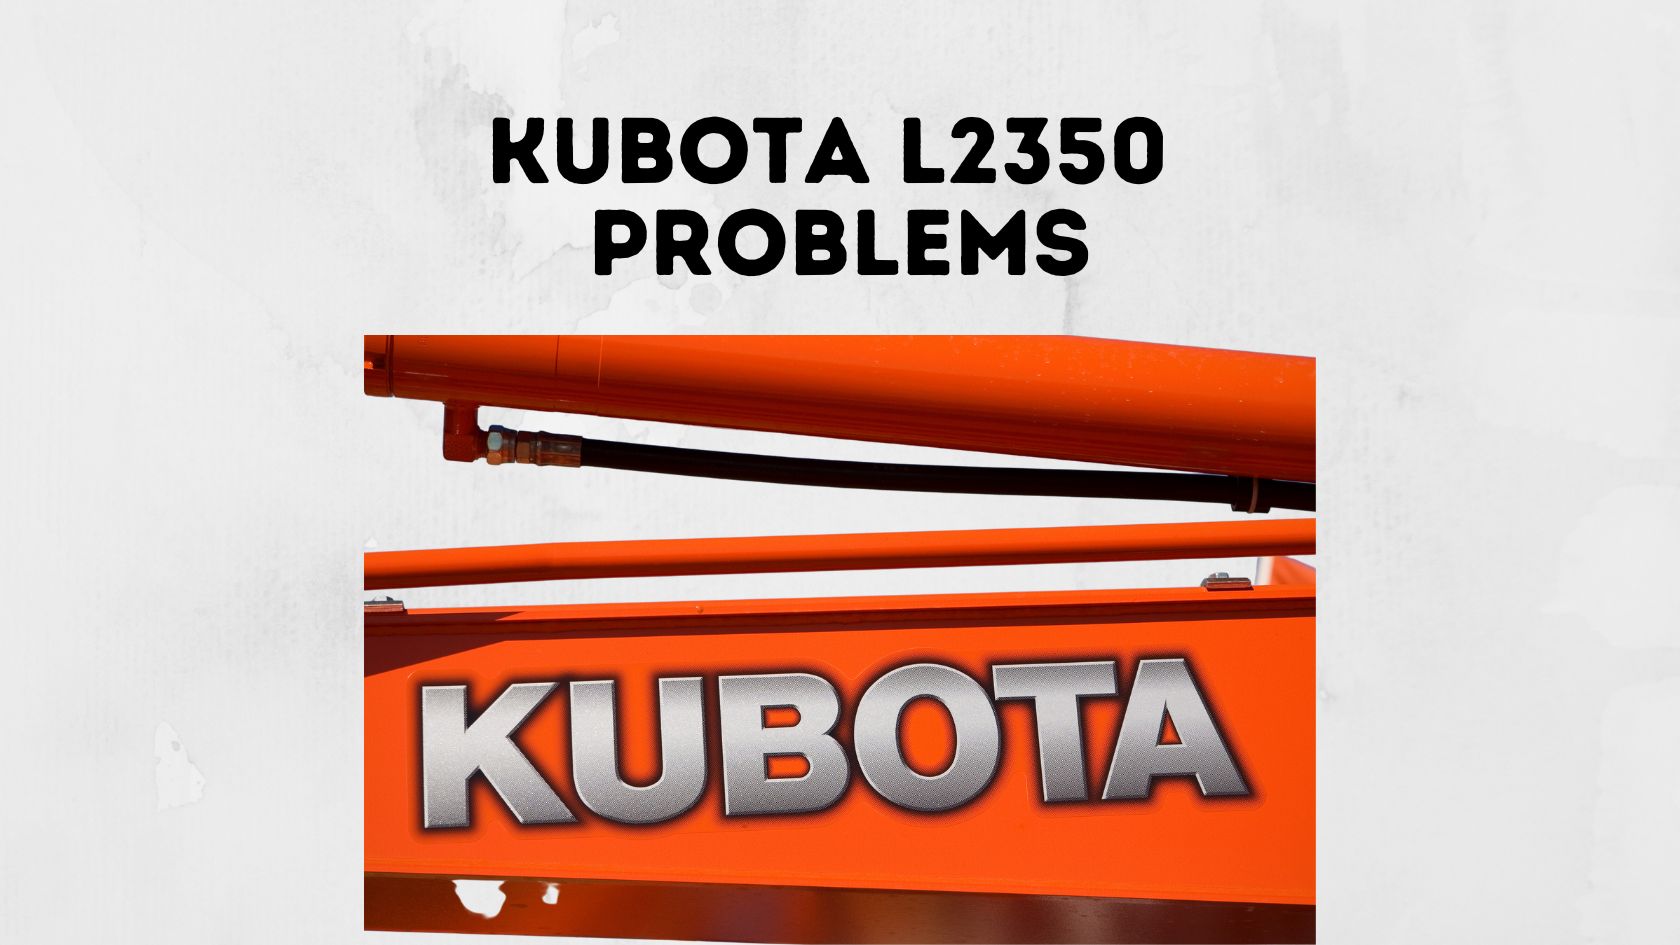 Kubota L2350 Problems